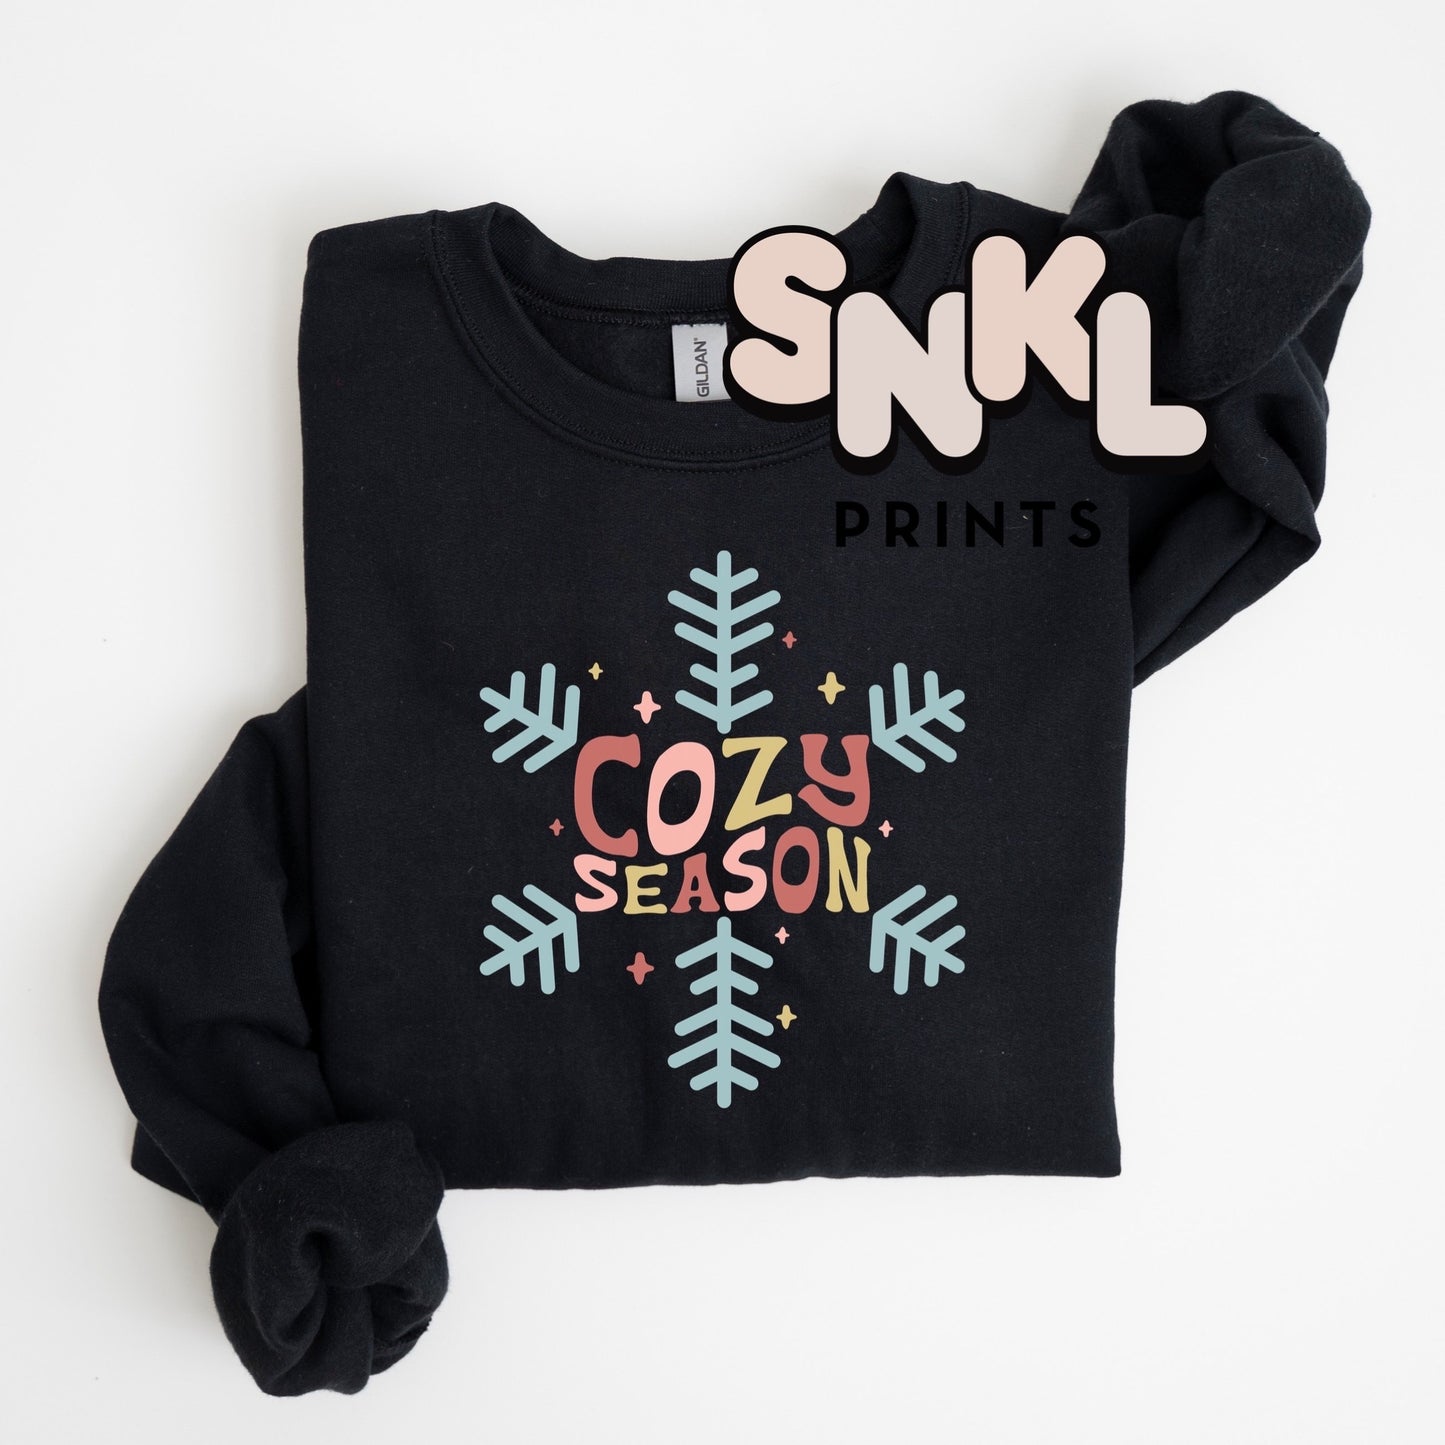 Cozy Season Snowflake | Adult - SNKL Prints